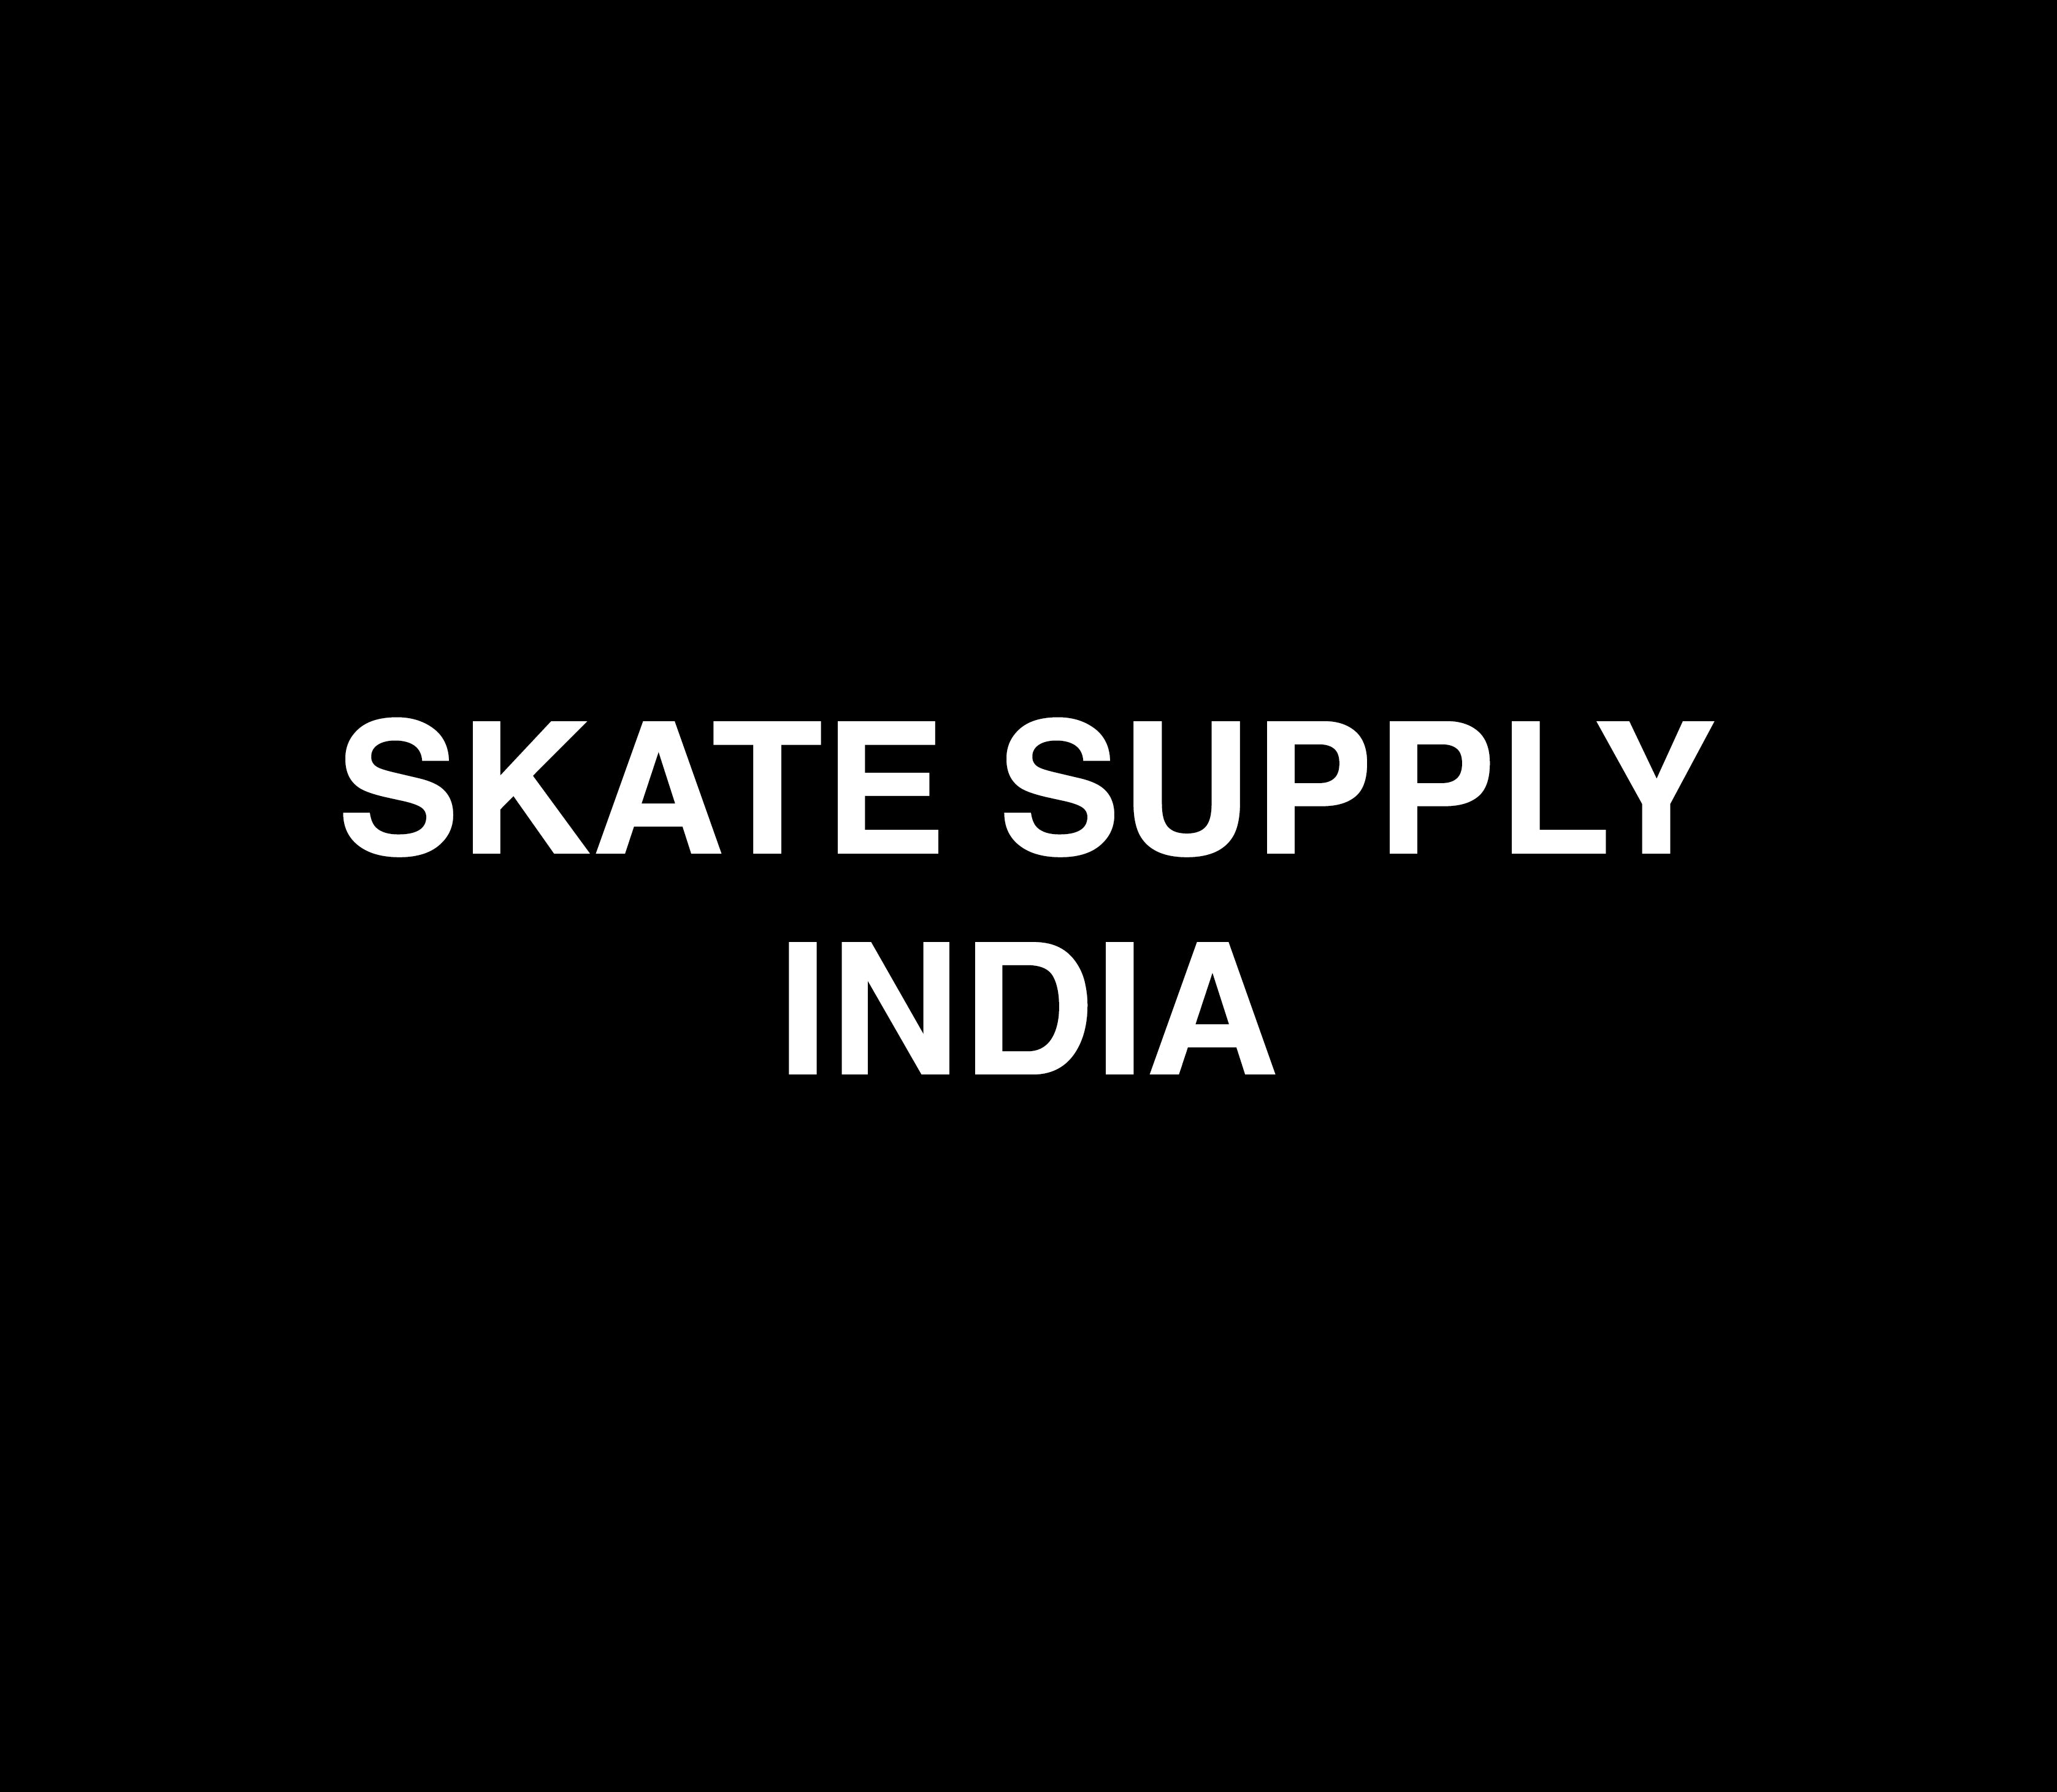 SKATE SUPPLY INDIA